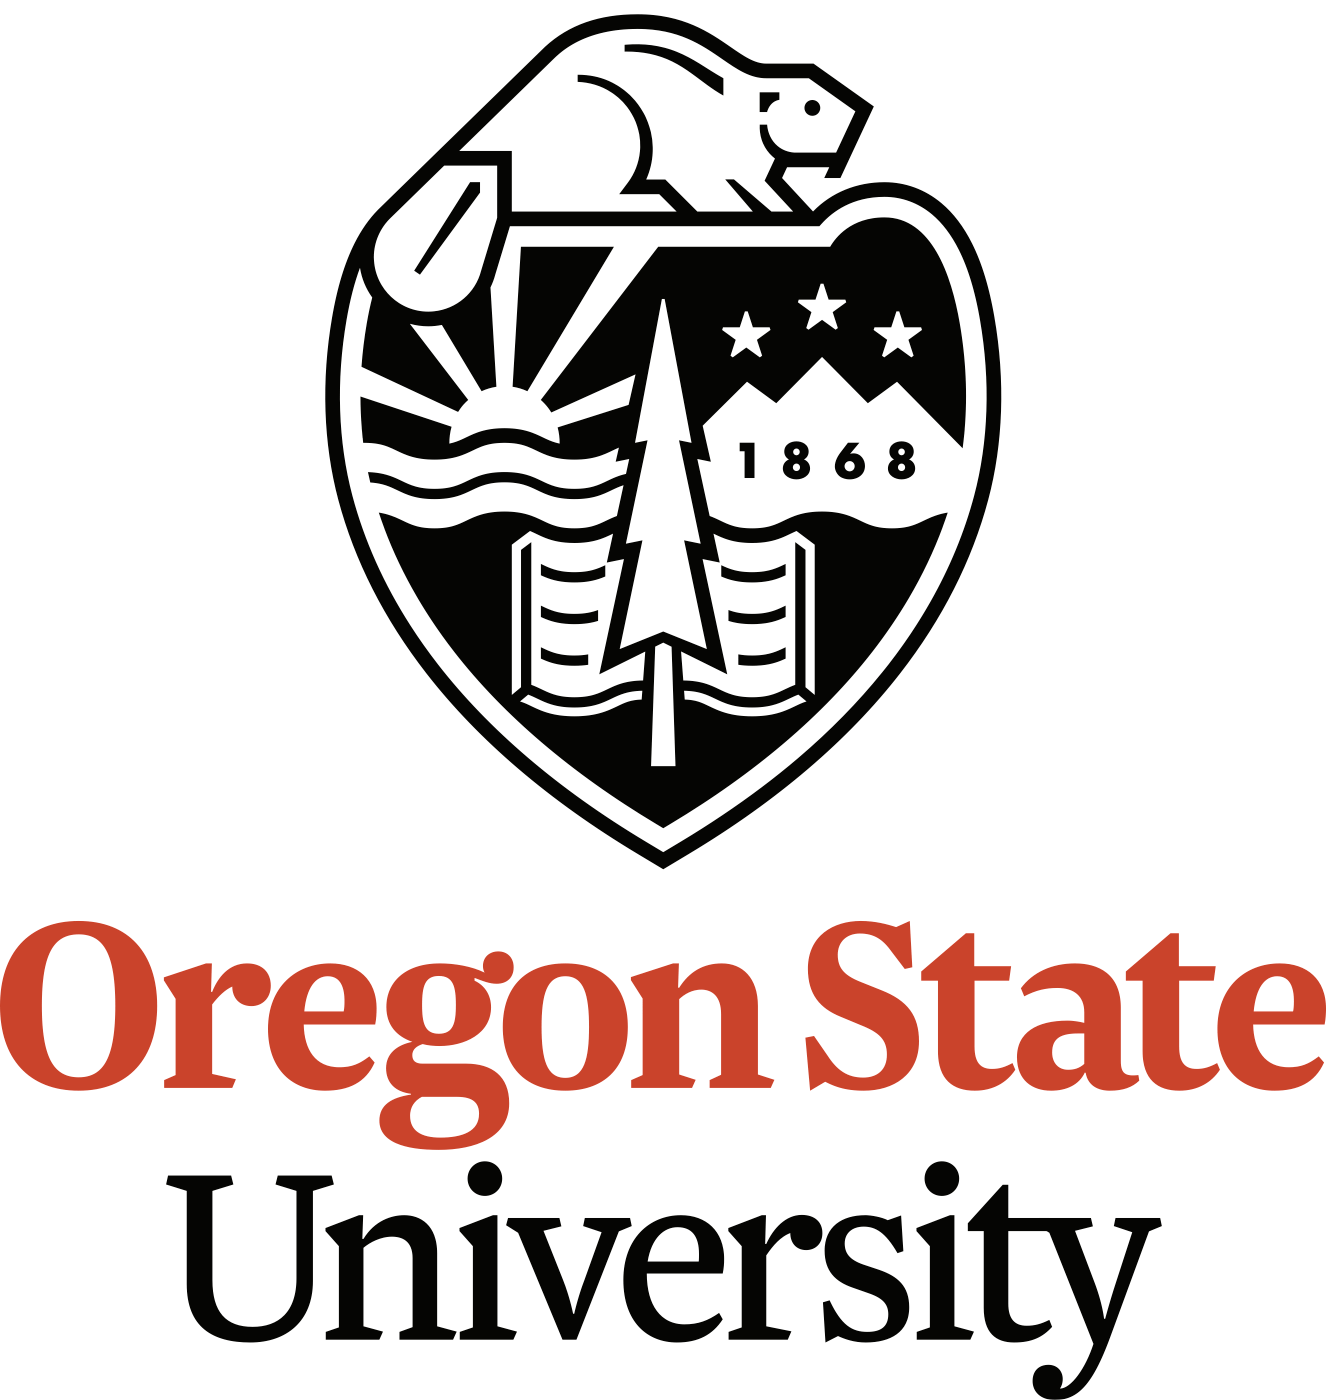 The Oregon State University logo